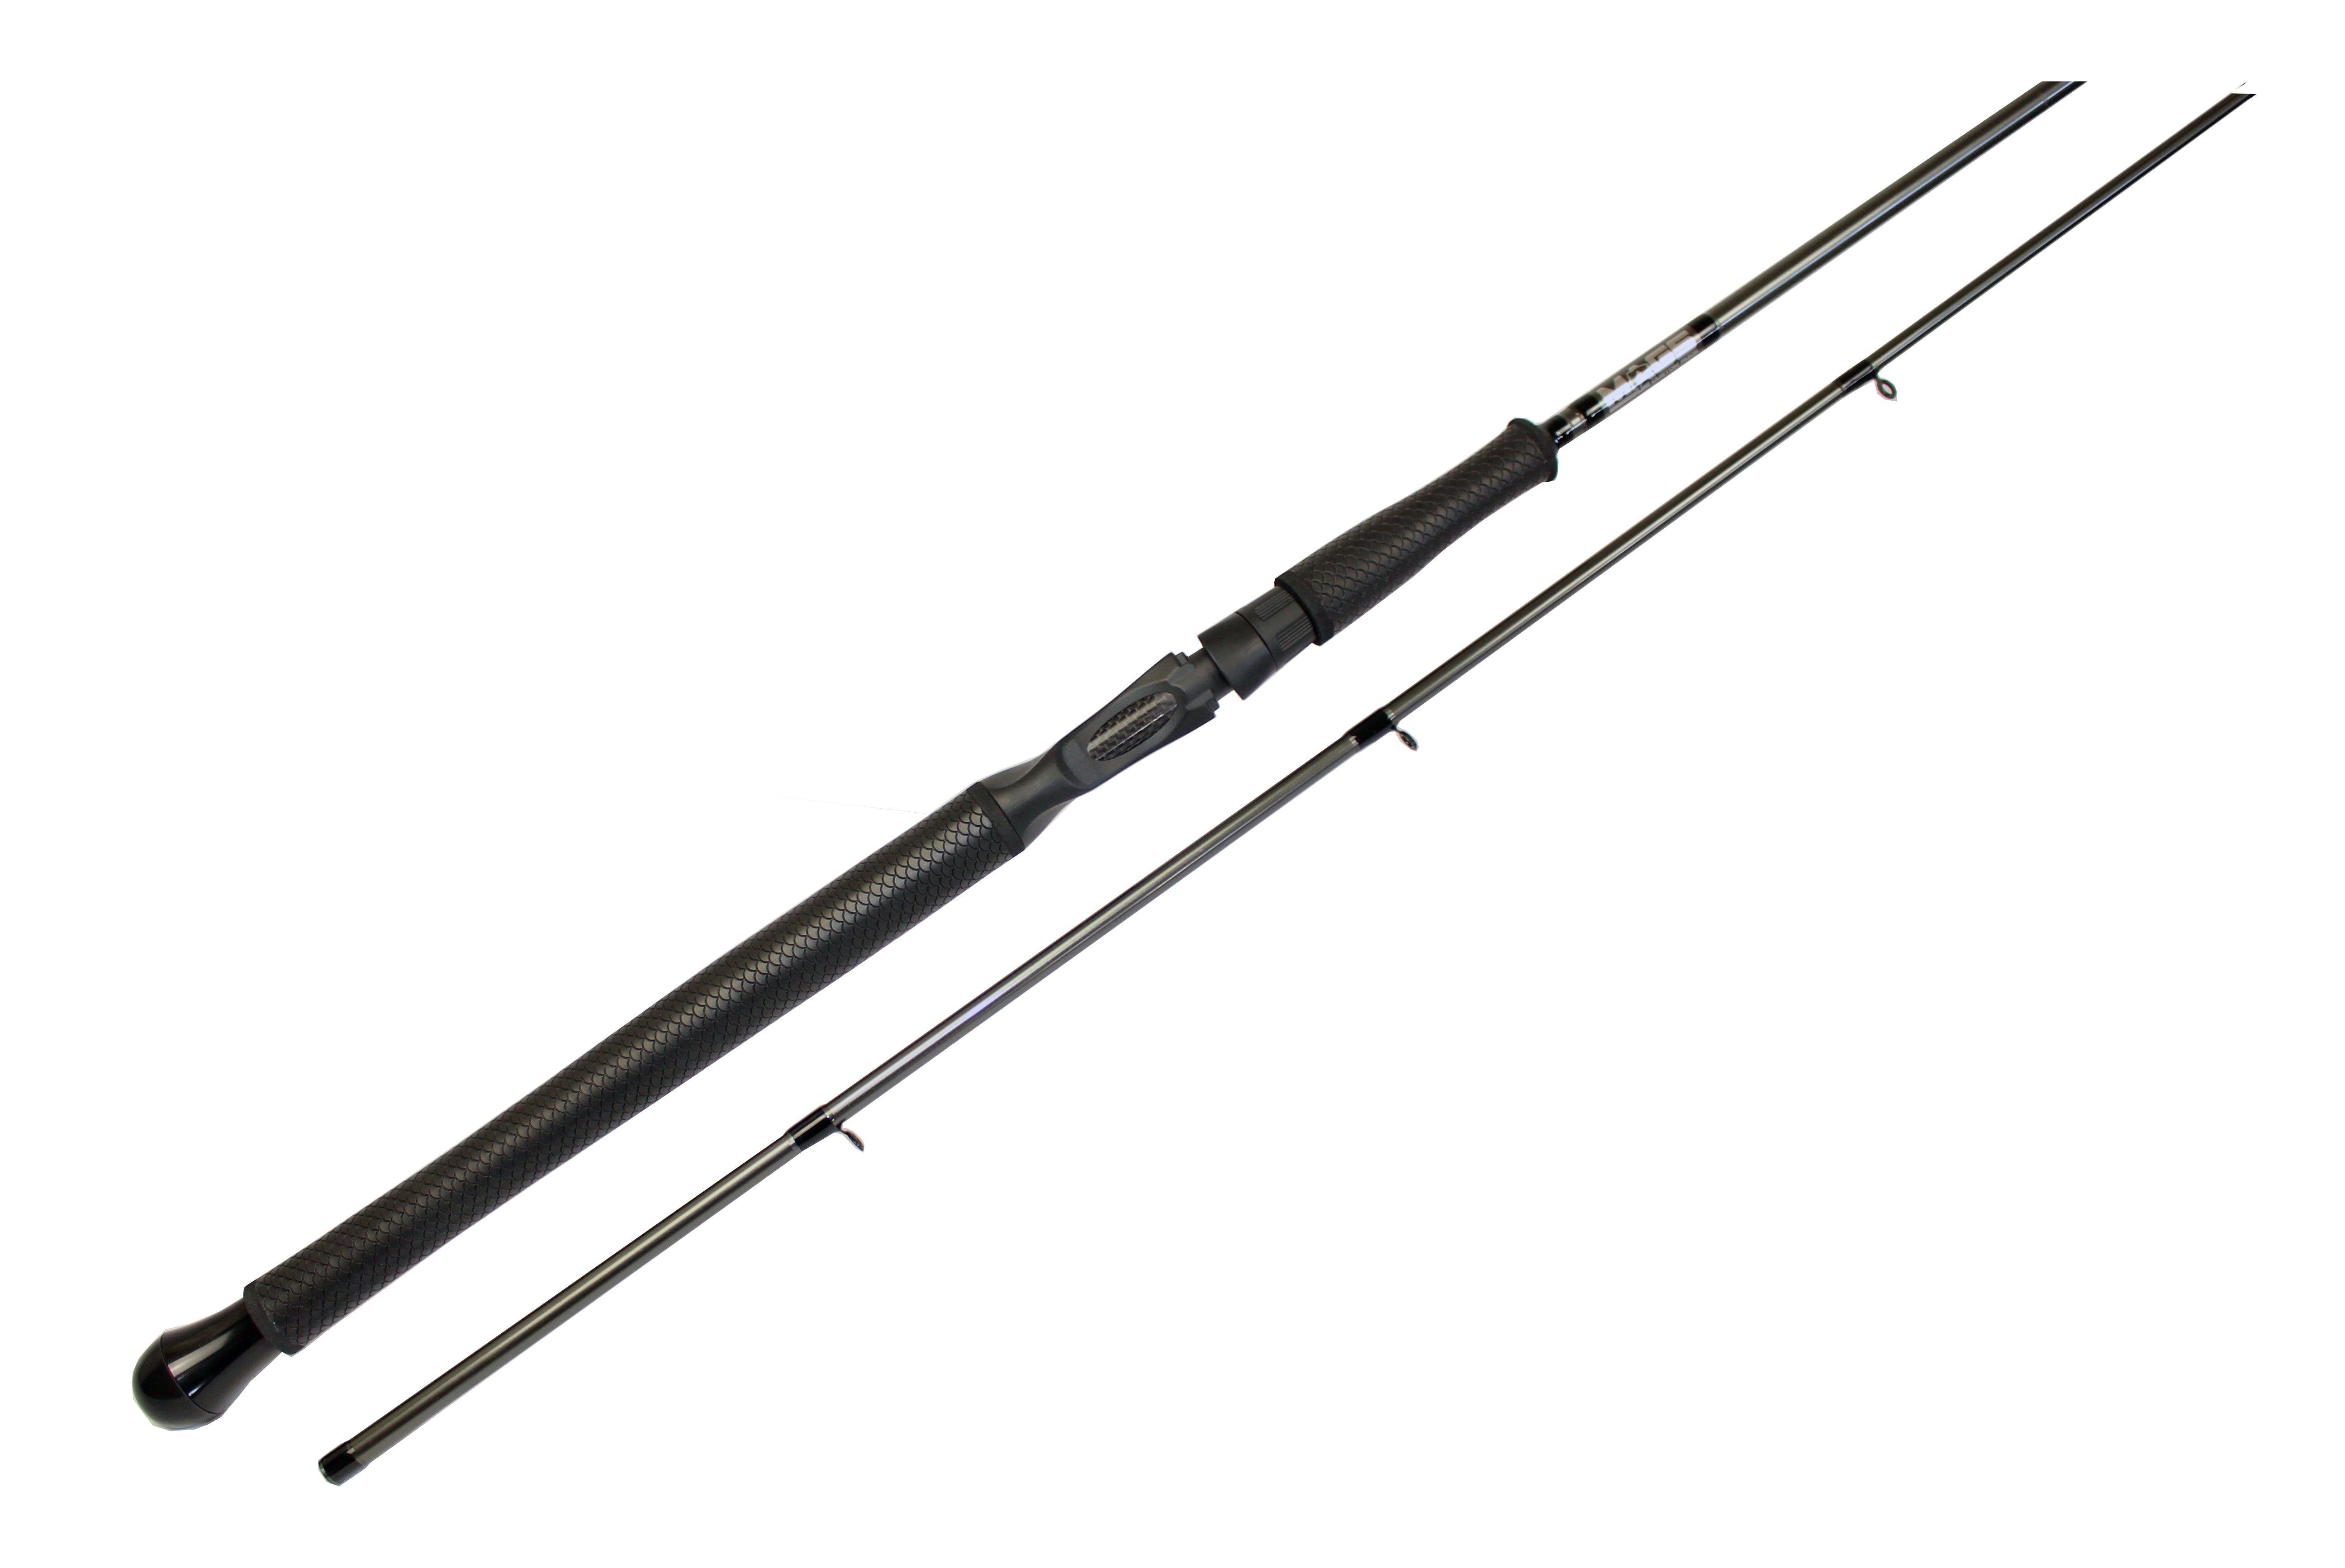 Streamside Custom Steelhead Float Rod 13'6, 3 Piece, Fixed Reel